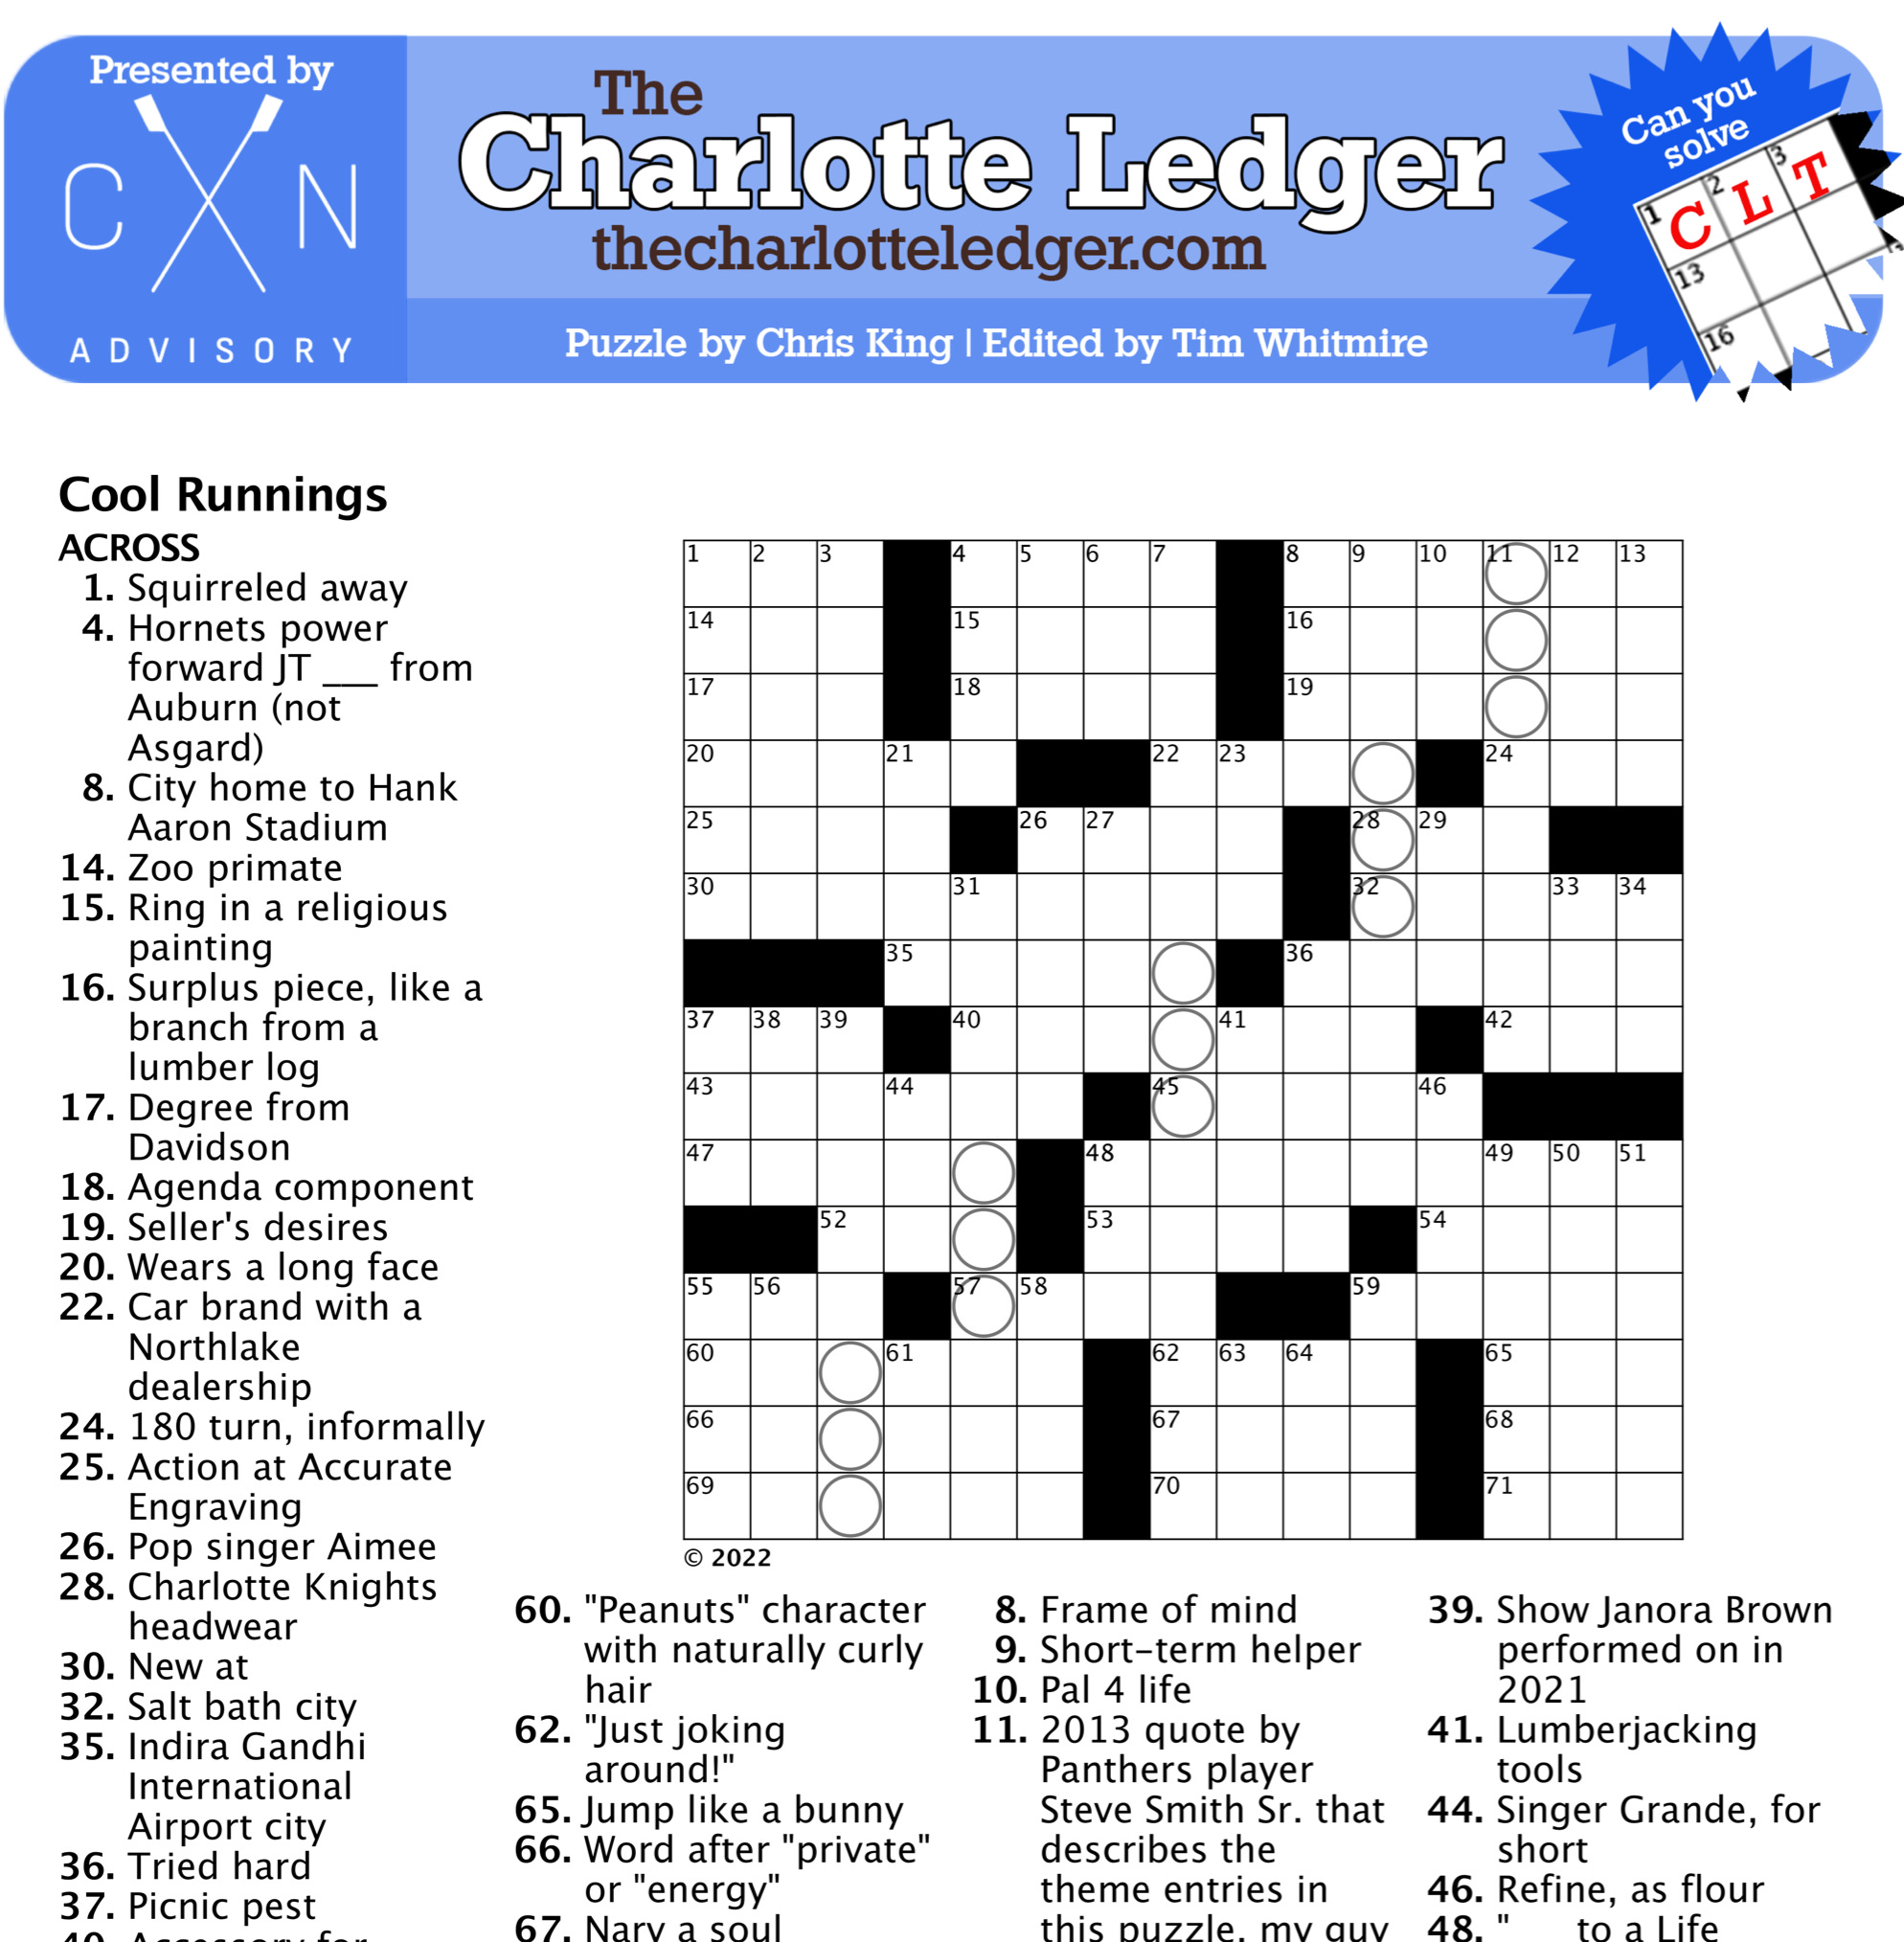 Crossword, Oct. 13, Puzzles